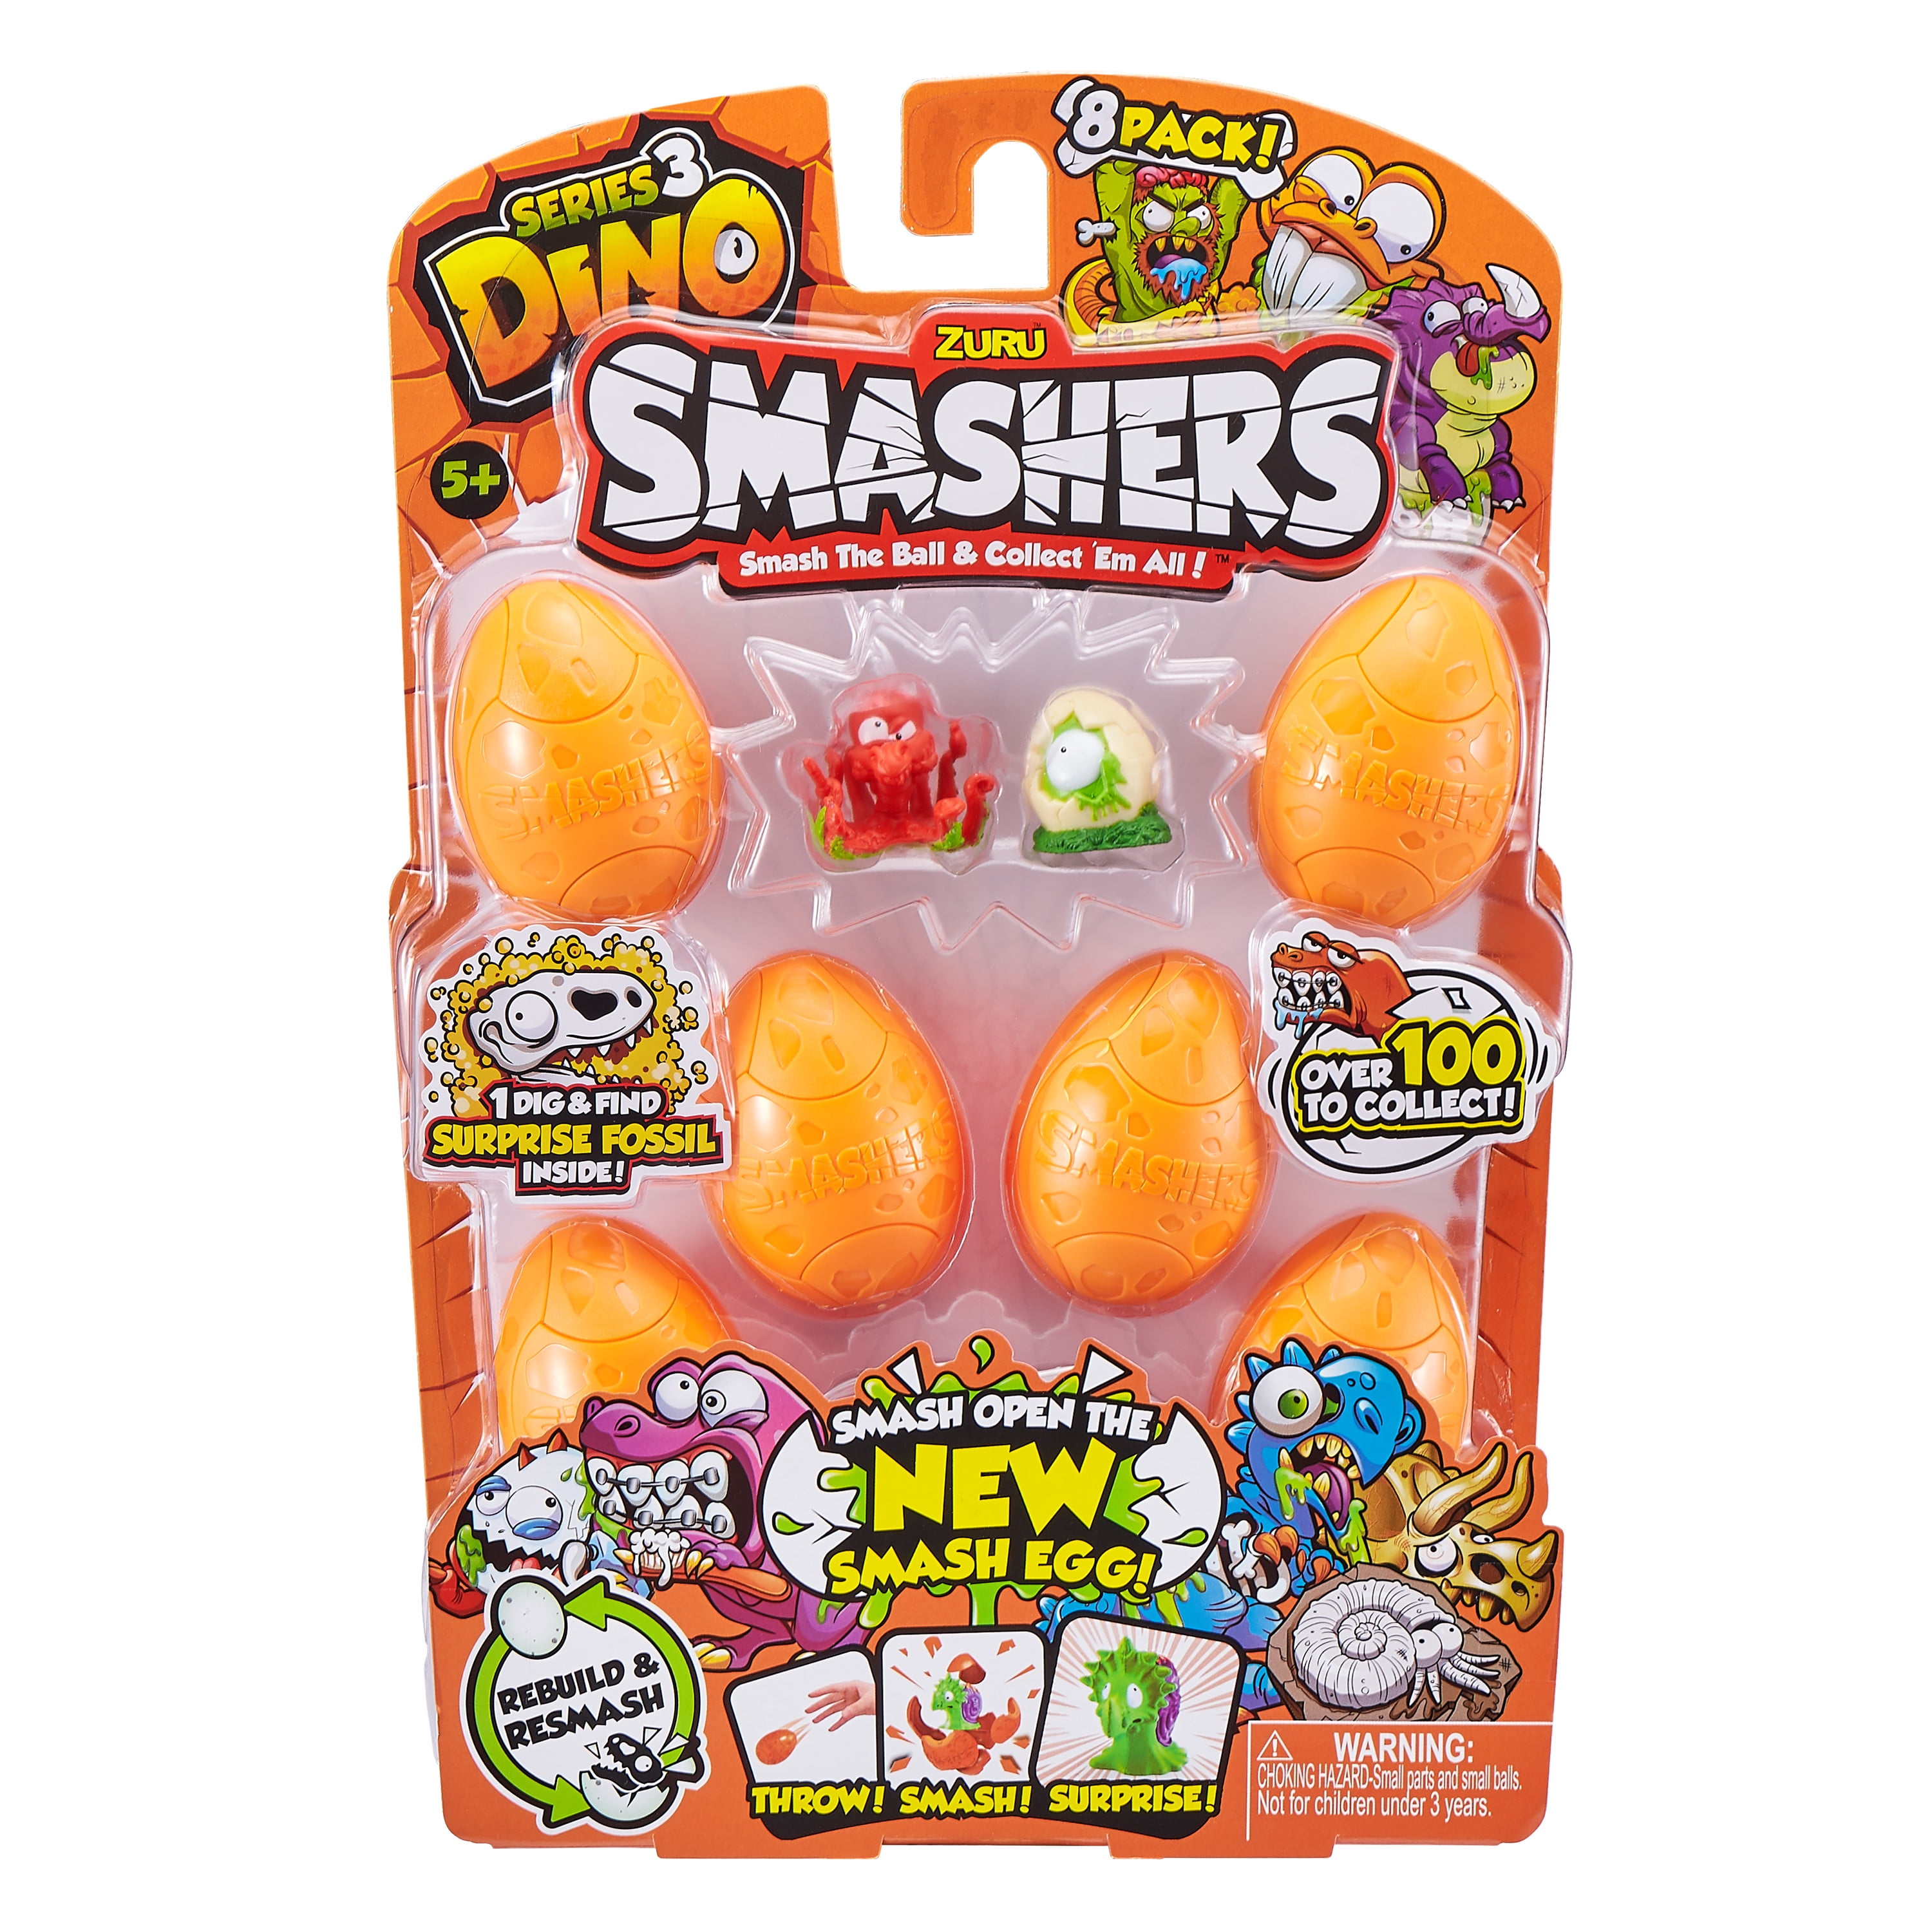 Smashers Smash Ball Collectibles Series 3 Dino by ZURU (8 Pack) -  Walmart.com